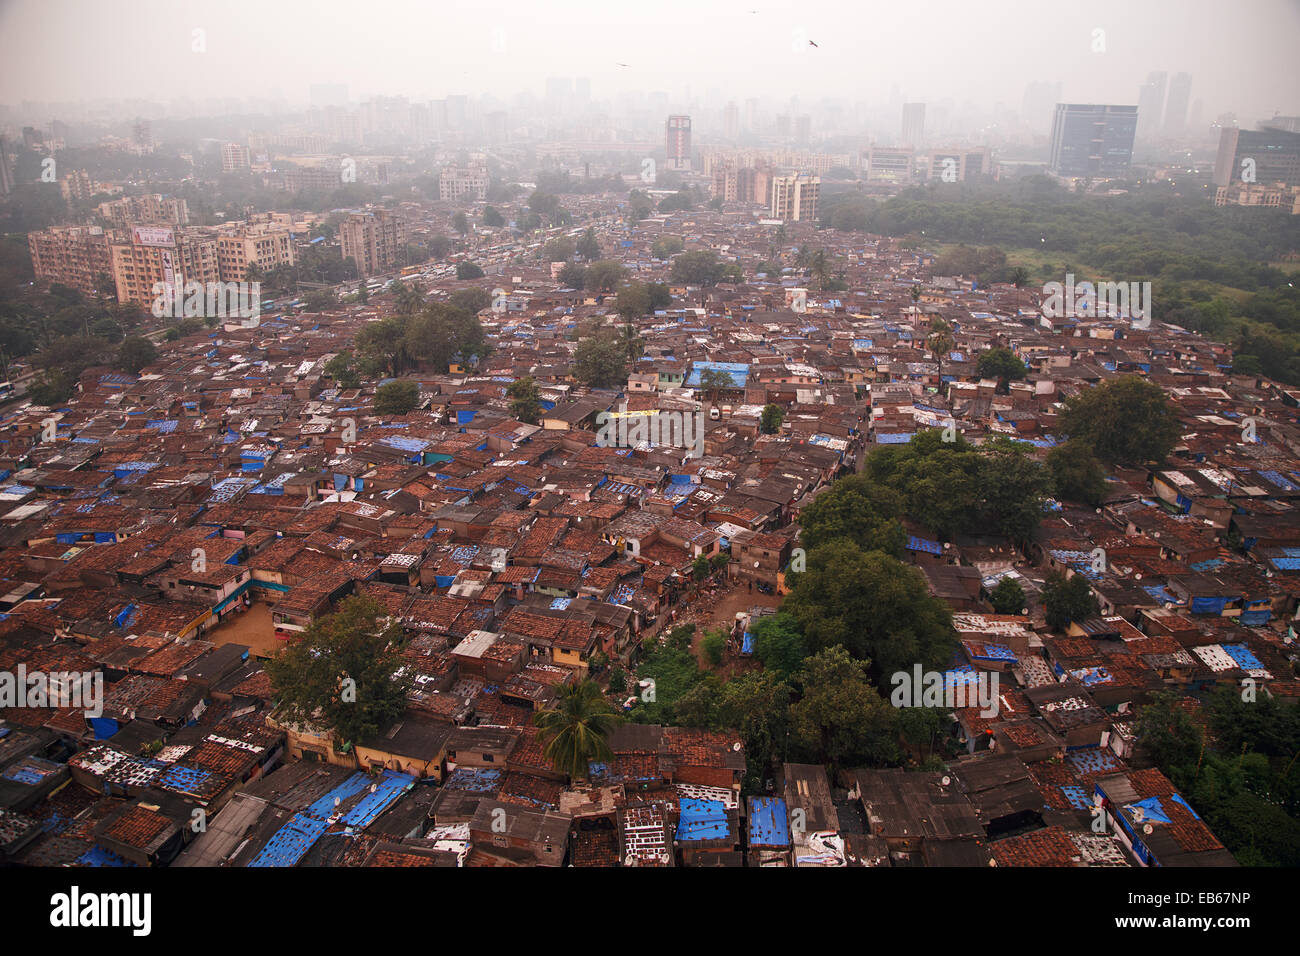 An view over a slum in Jogeshwari - Goreagaon East area in the suburbs of Mumbai, India. Stock Photo